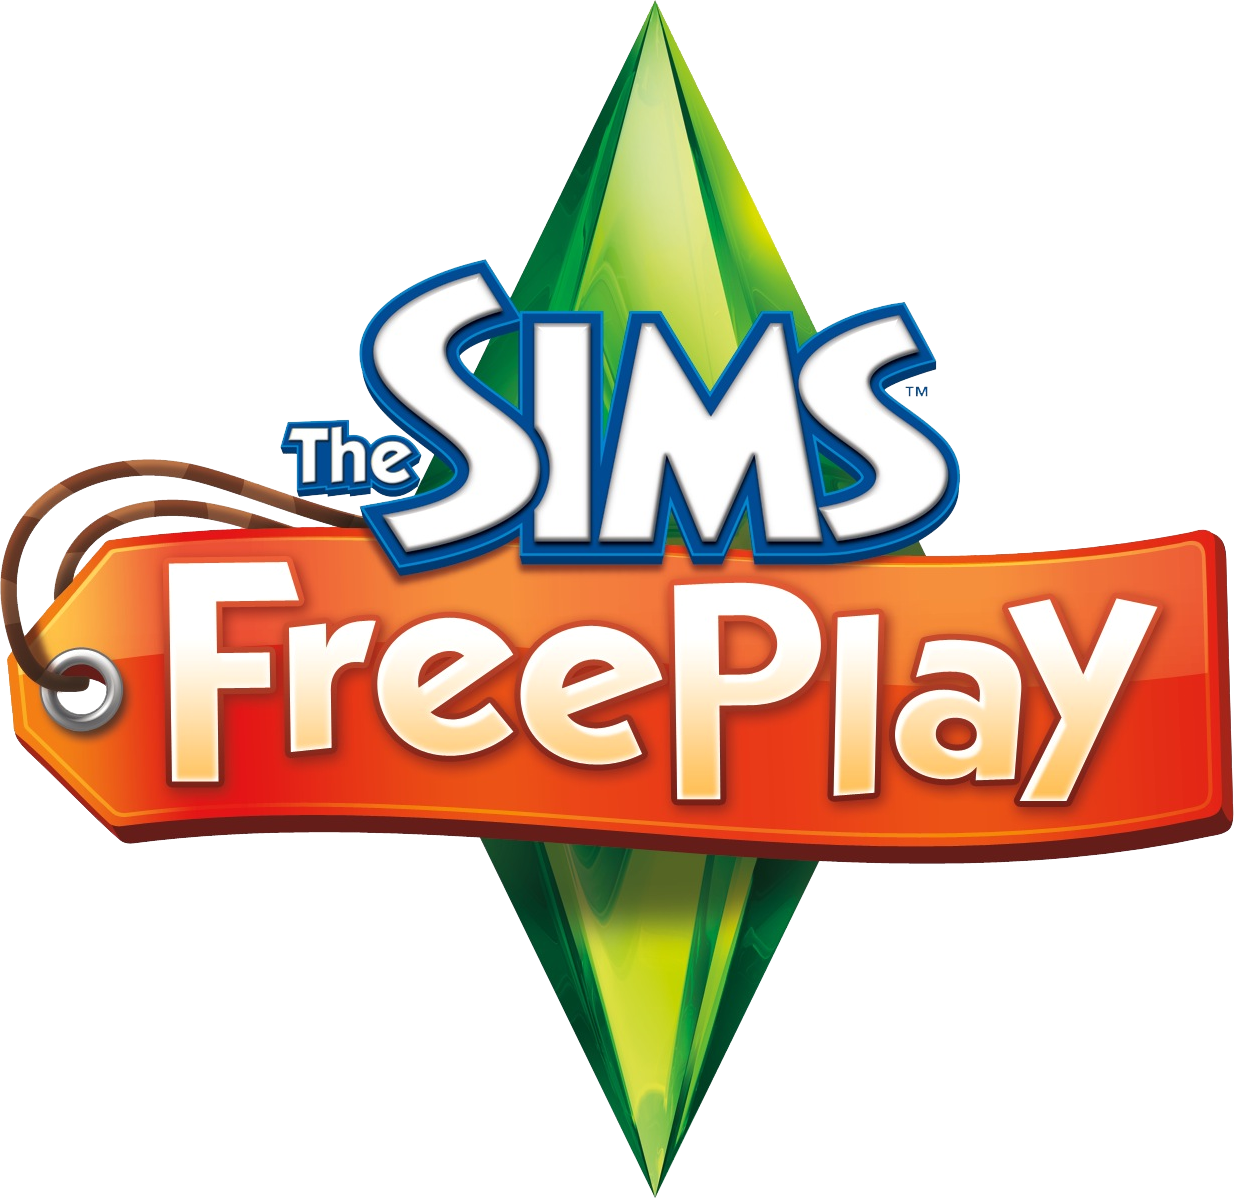 the sims freeplay mod aptoide 5.17.0